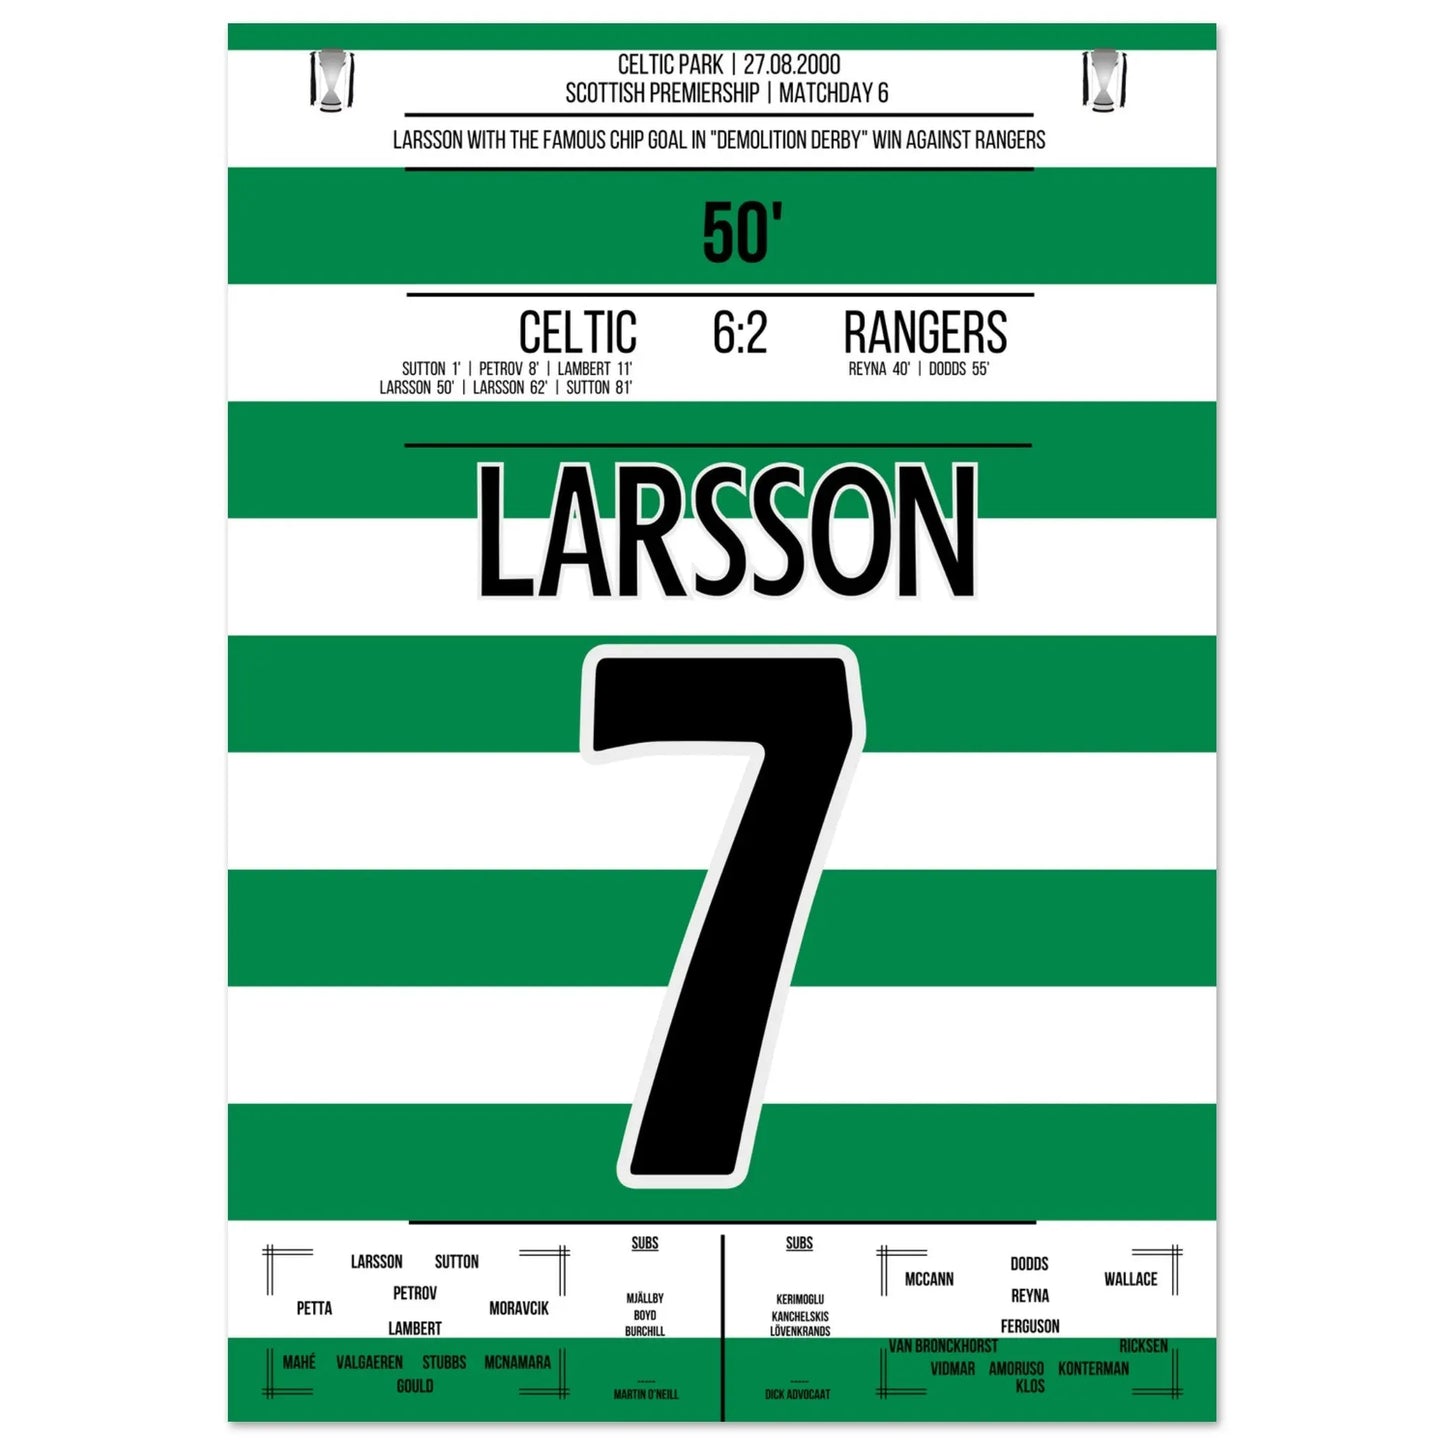 Larsson's legendary "Chip" in the "Demolition Derby" in 2000